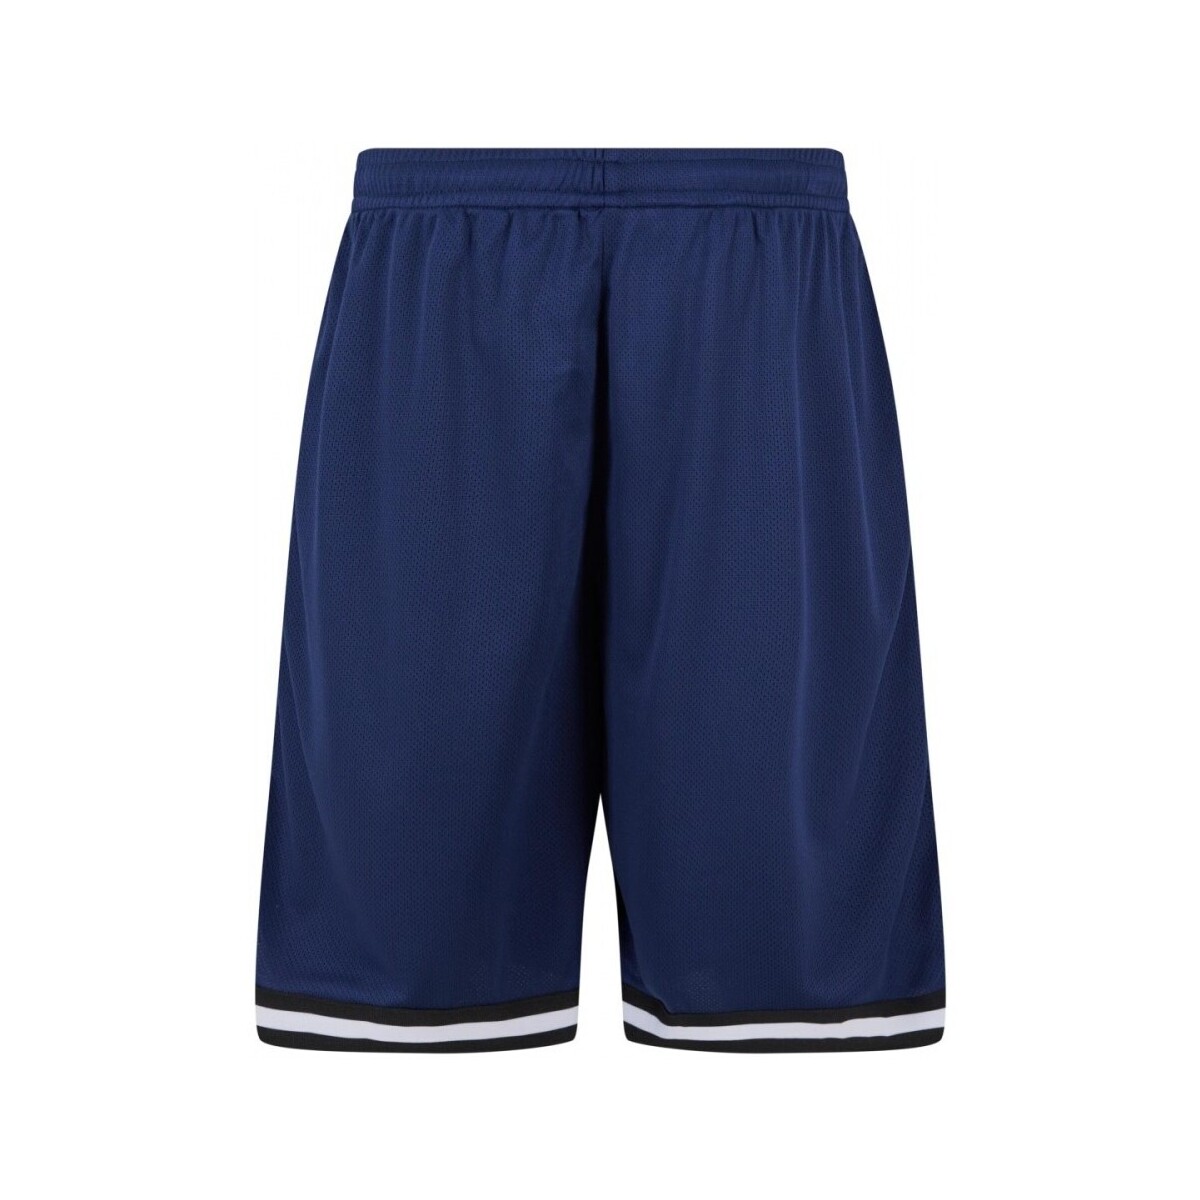 Kleidung Herren Shorts / Bermudas Urban Classics Streifen Mesh Shorts Artikel Tb243 Blau